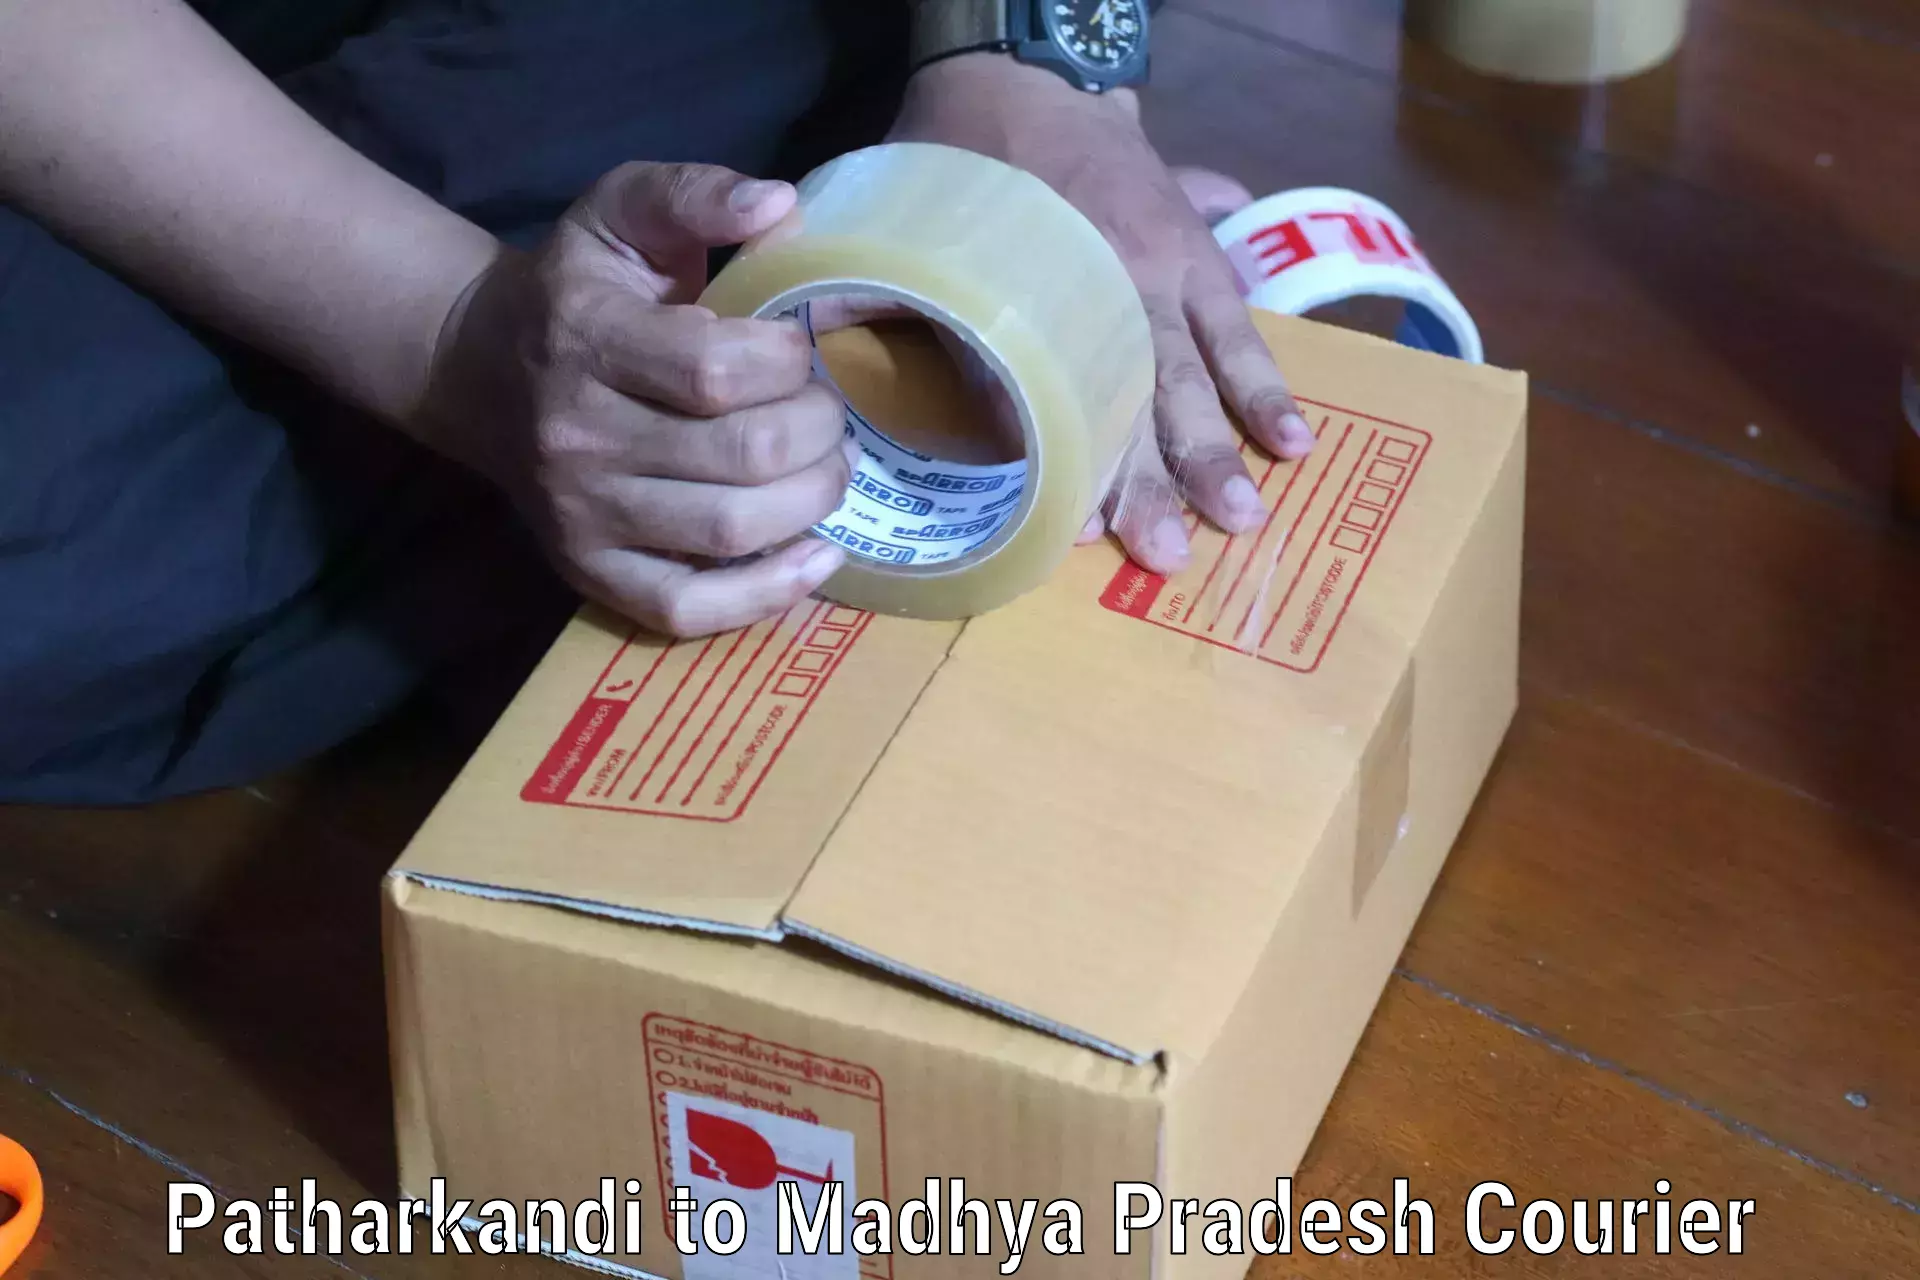 Courier service innovation Patharkandi to Panna